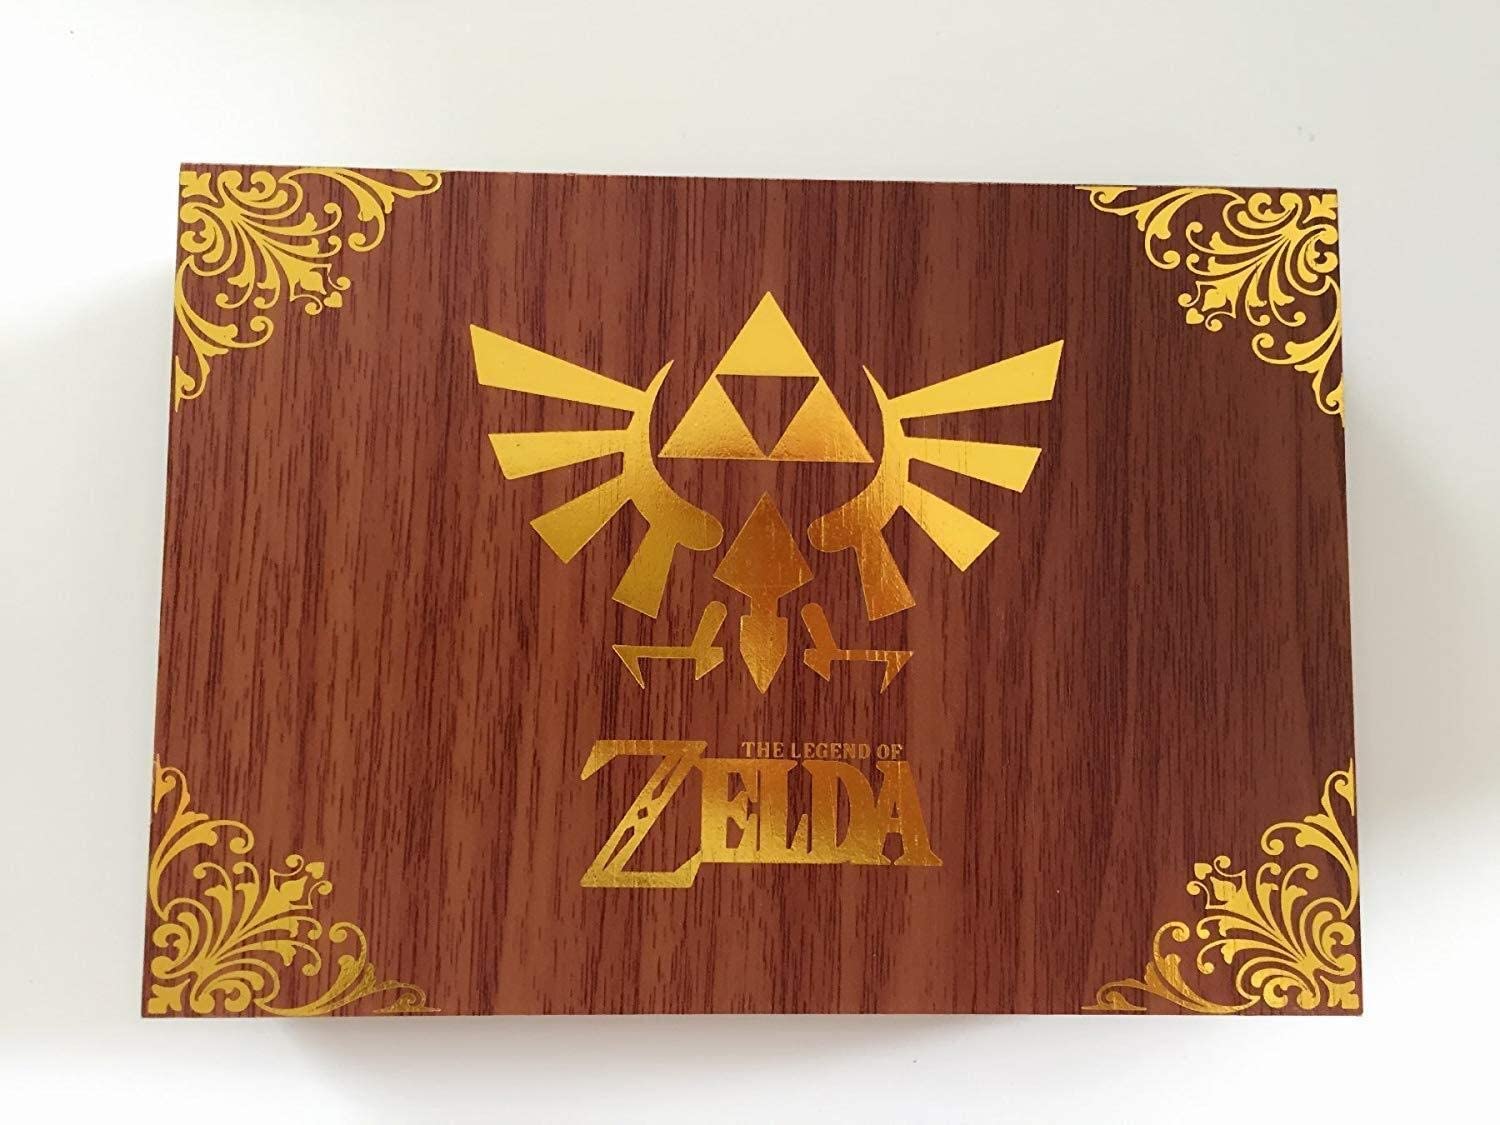 The Legend of Zelda wooden box 10 set Keychain مجموعة ميداليات أسطورة زيلدا.